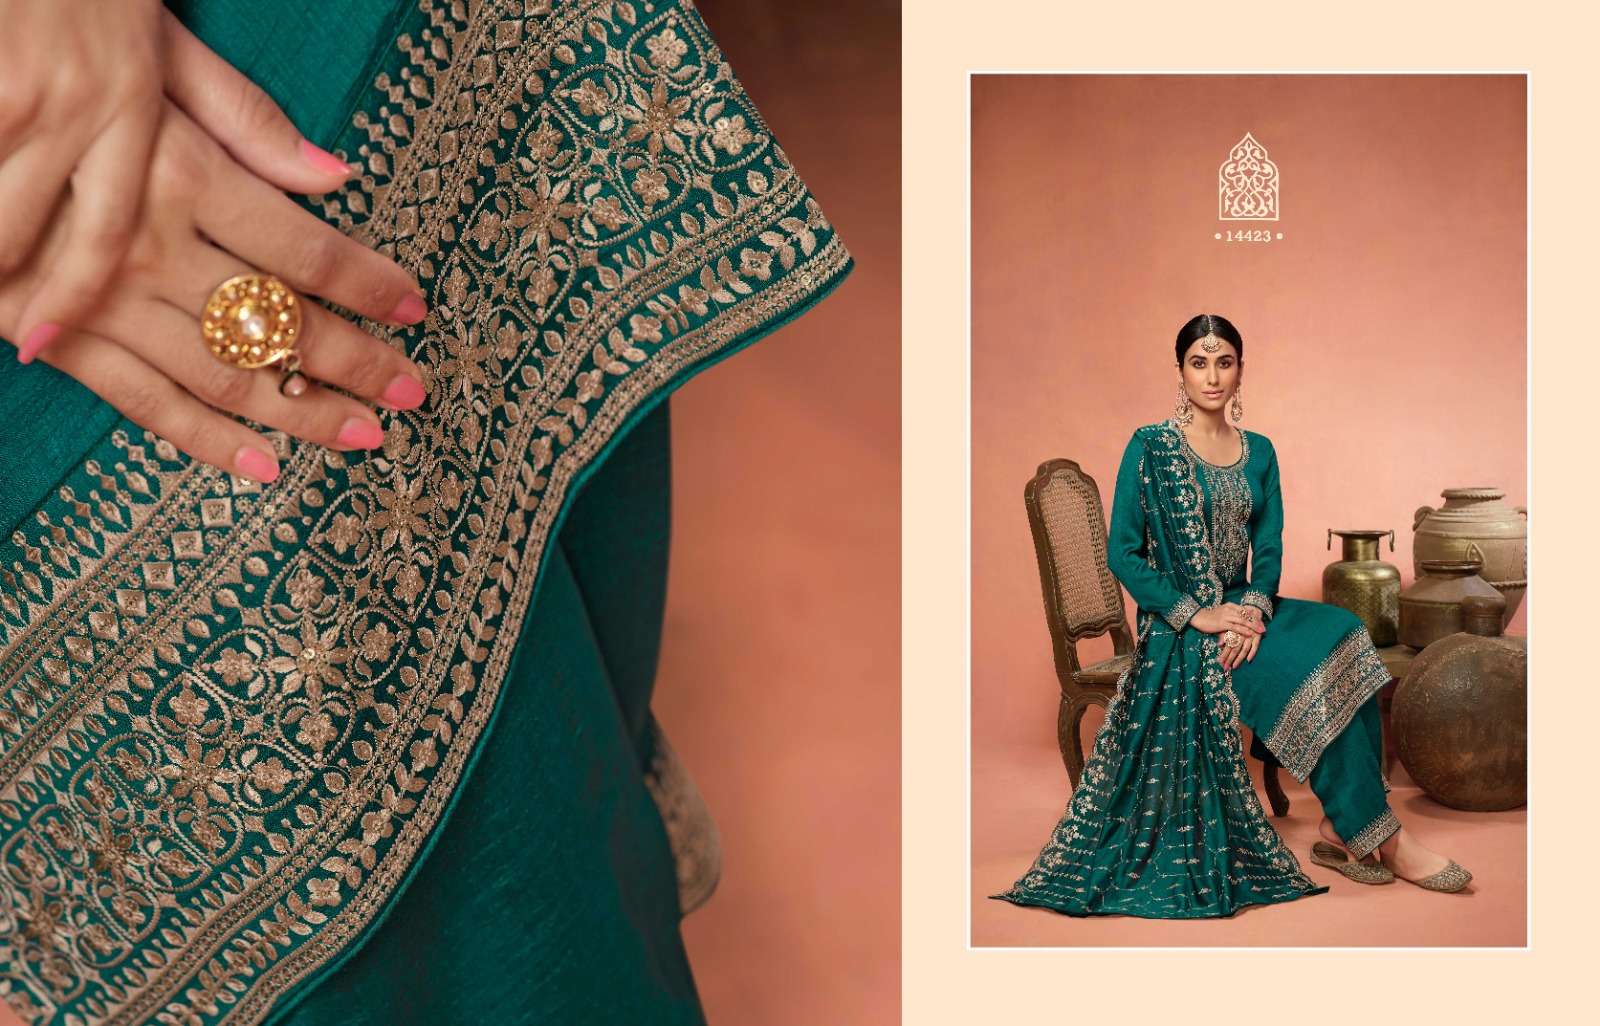 zisa noor 14421-14426 series stylish designer top bottom with dupatta latest collection surat 